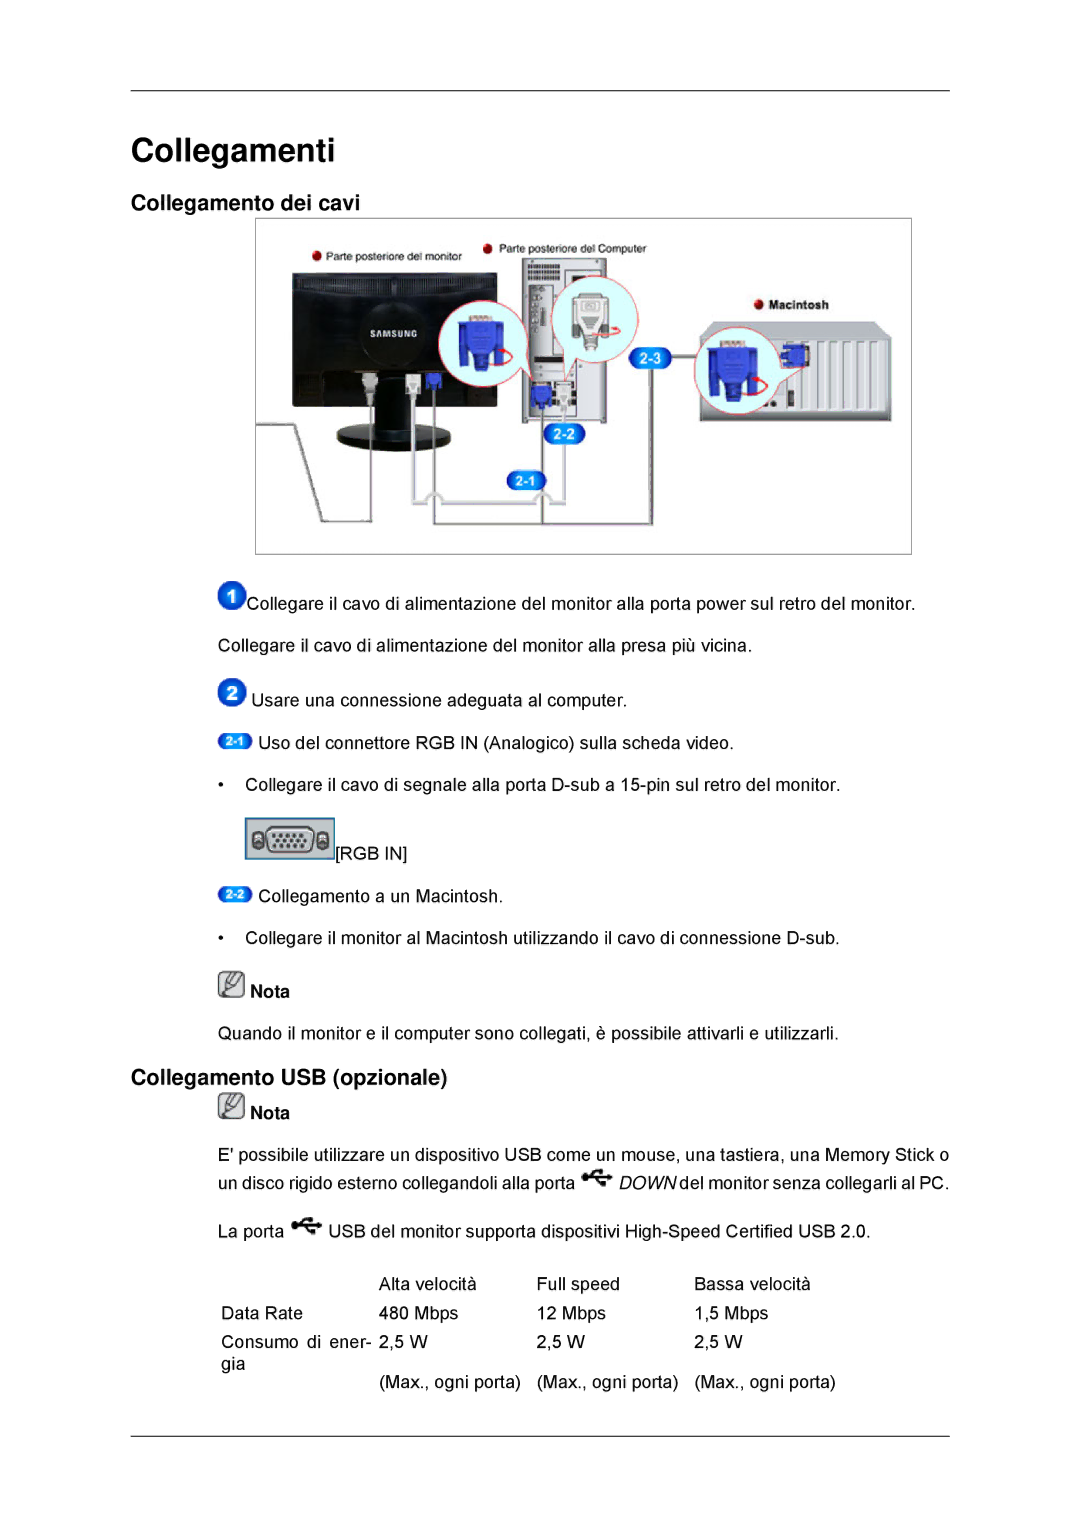 Samsung LS23MYYKBBA/EN, LS23MYYKBB/EDC manual Collegamenti, Collegamento dei cavi, Collegamento USB opzionale 